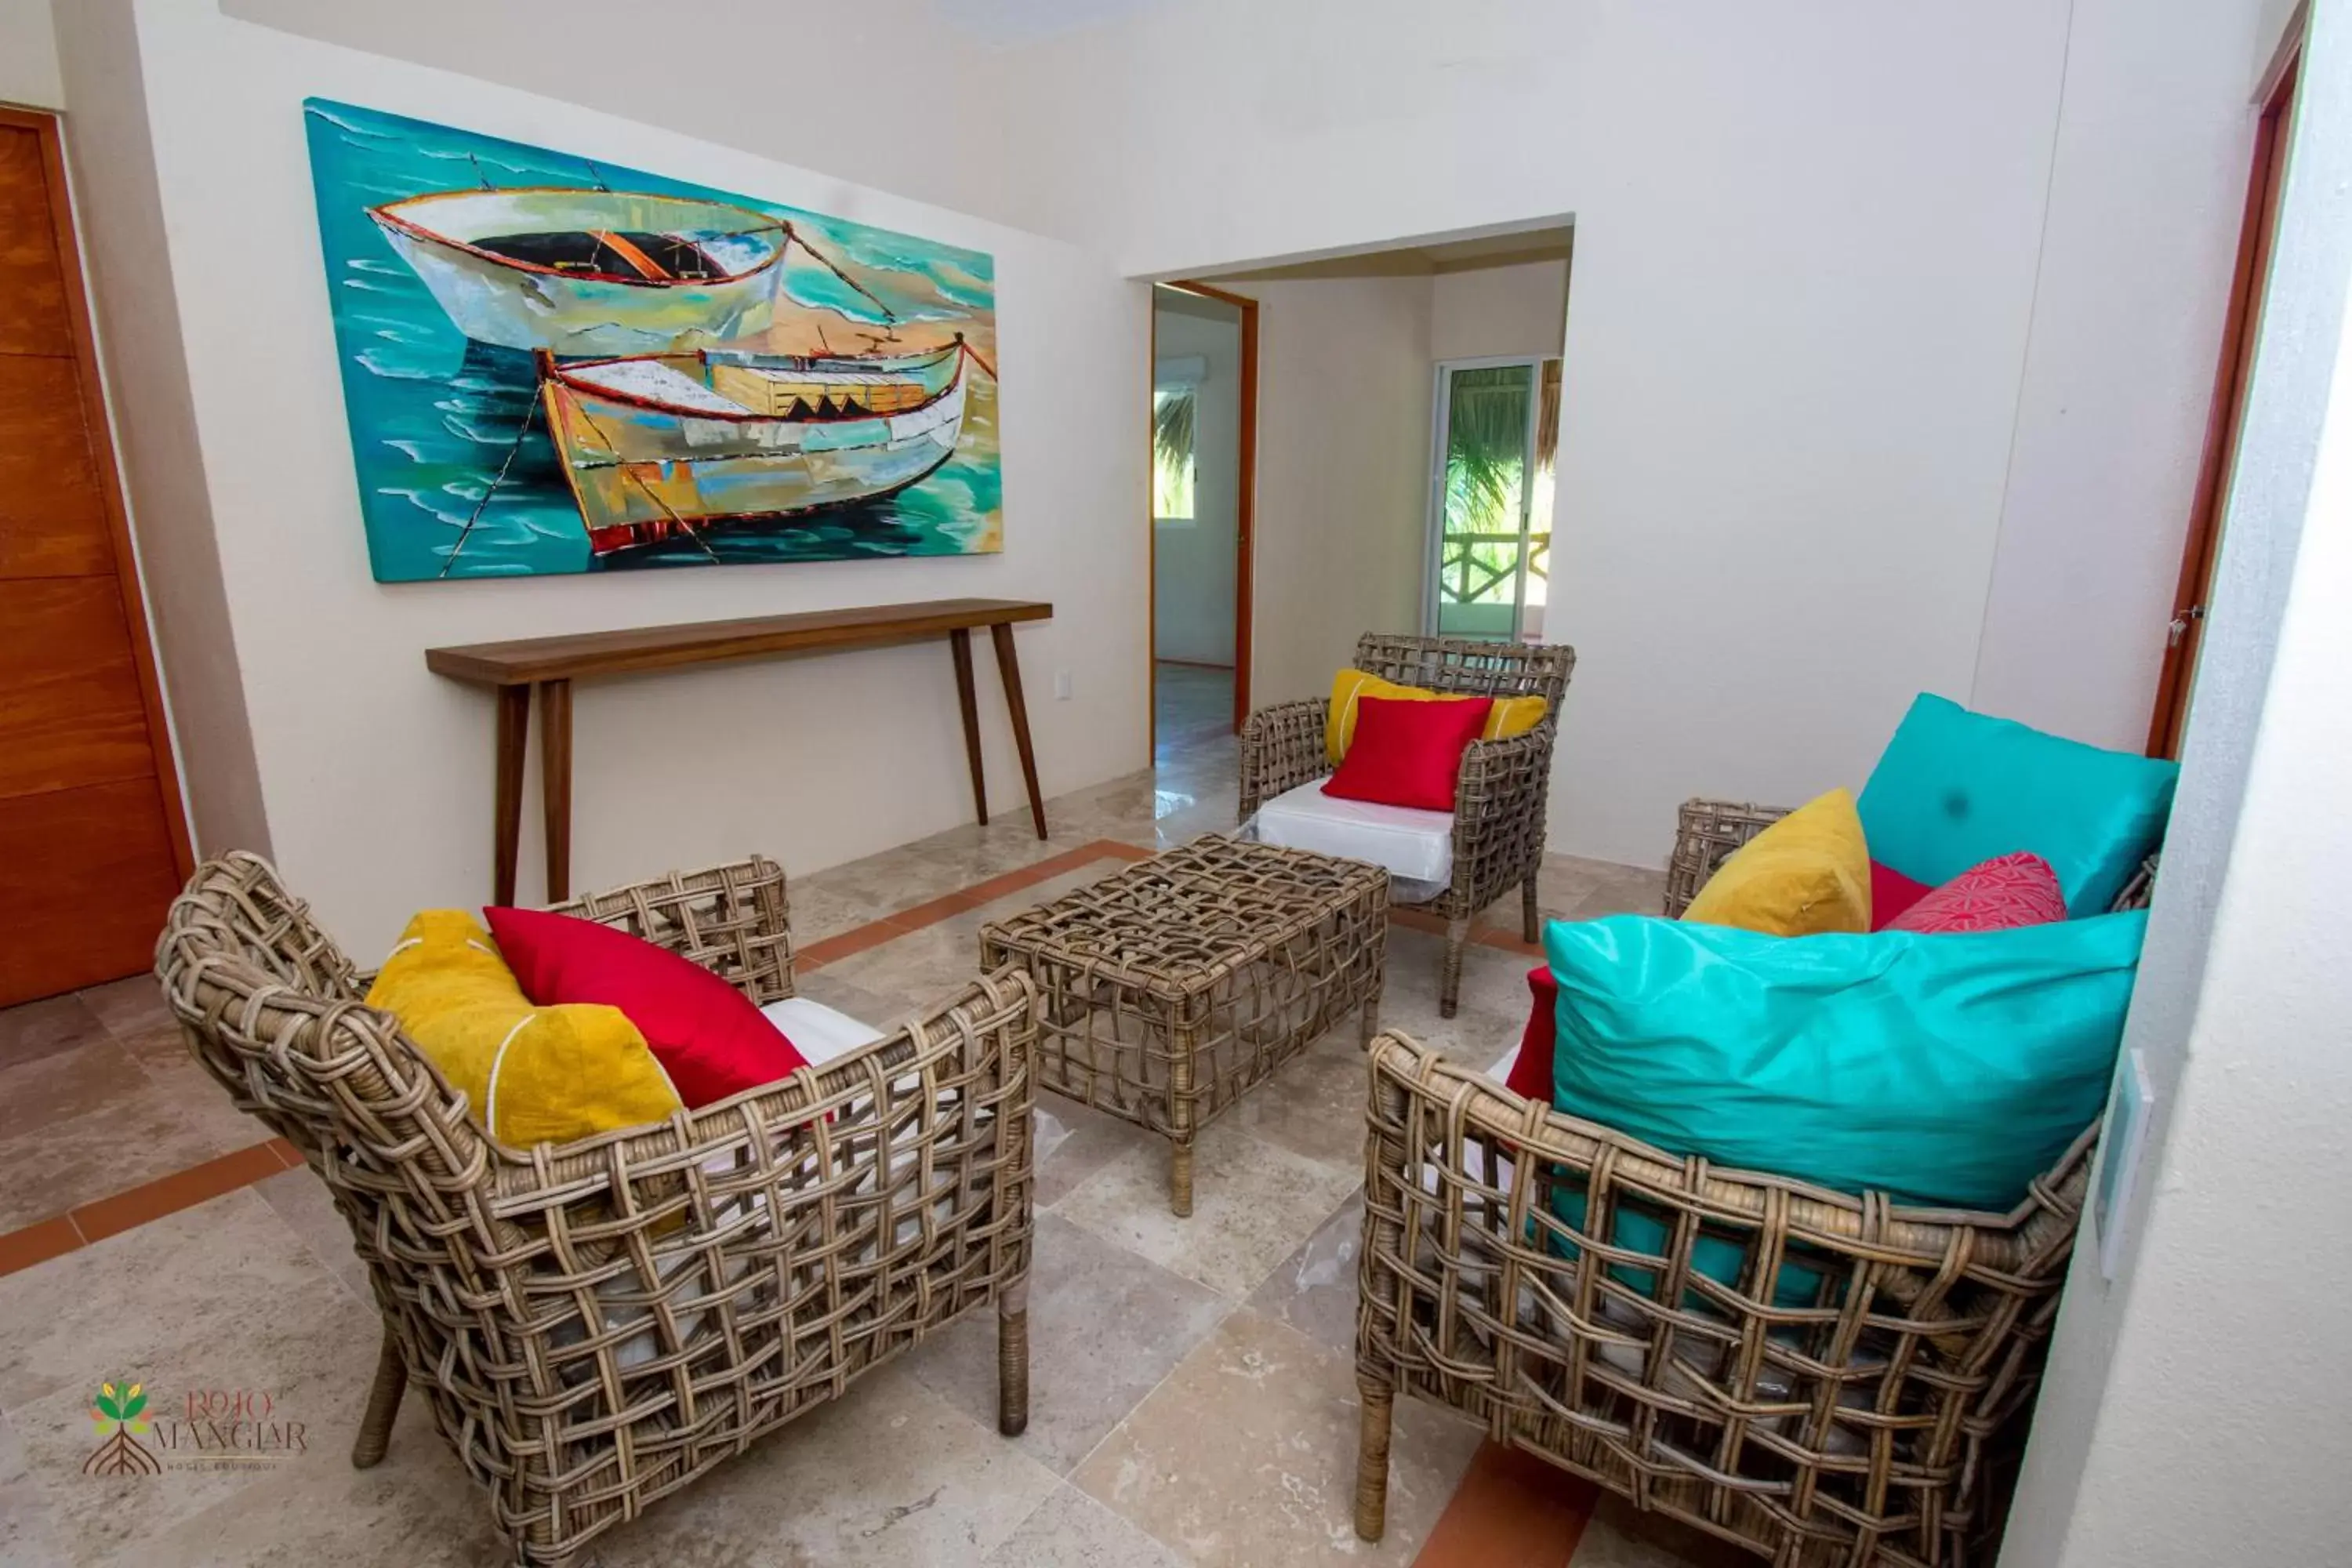 Living room, Seating Area in Rojo Manglar Acapulco